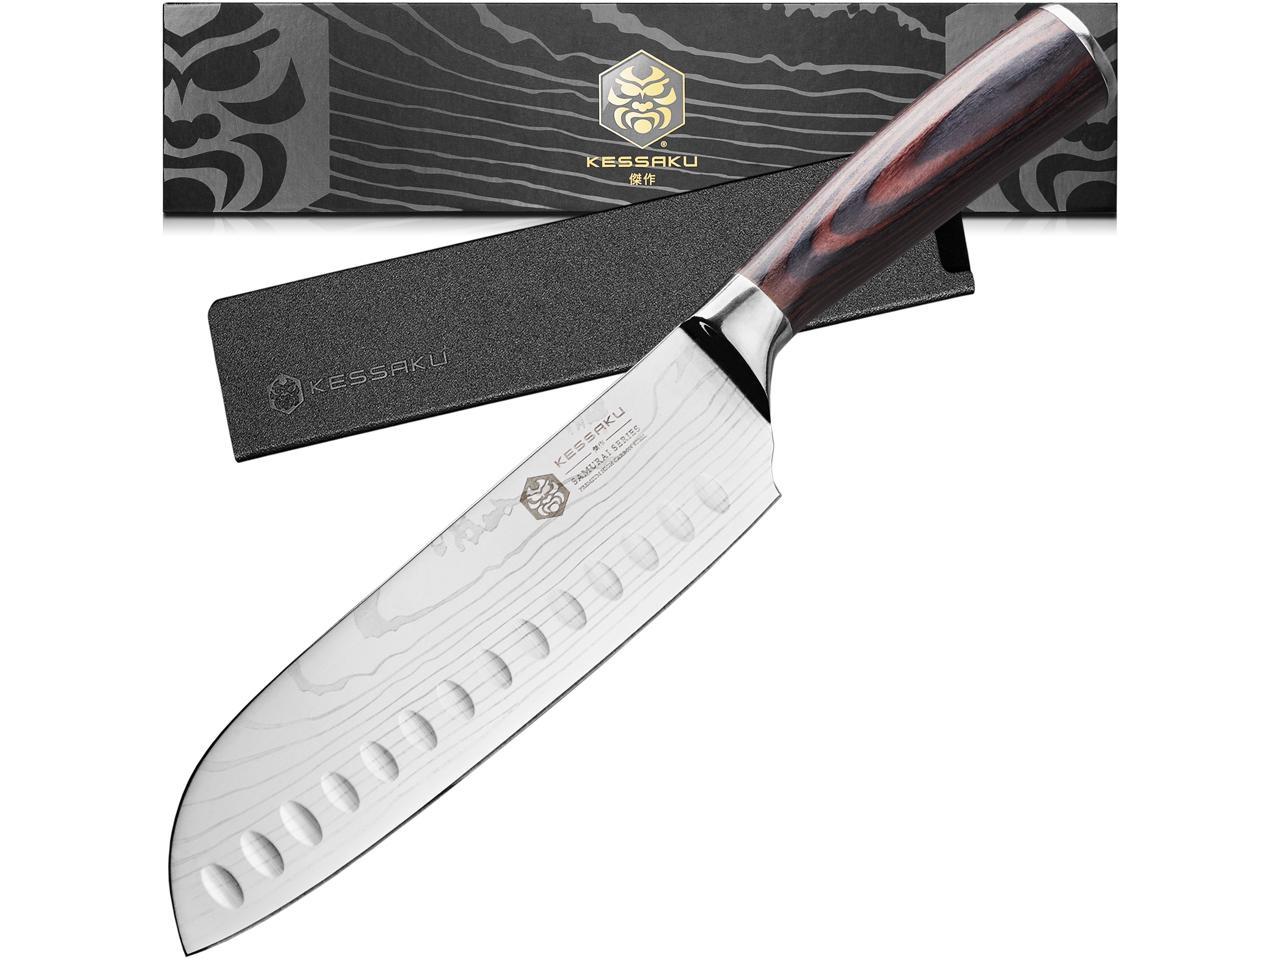 Kessaku 7-Inch Santoku Knife - Samurai Series - Forged High Carbon 7Cr17MoV  Stainless Steel - Pakkawood Handle with Blade Guard